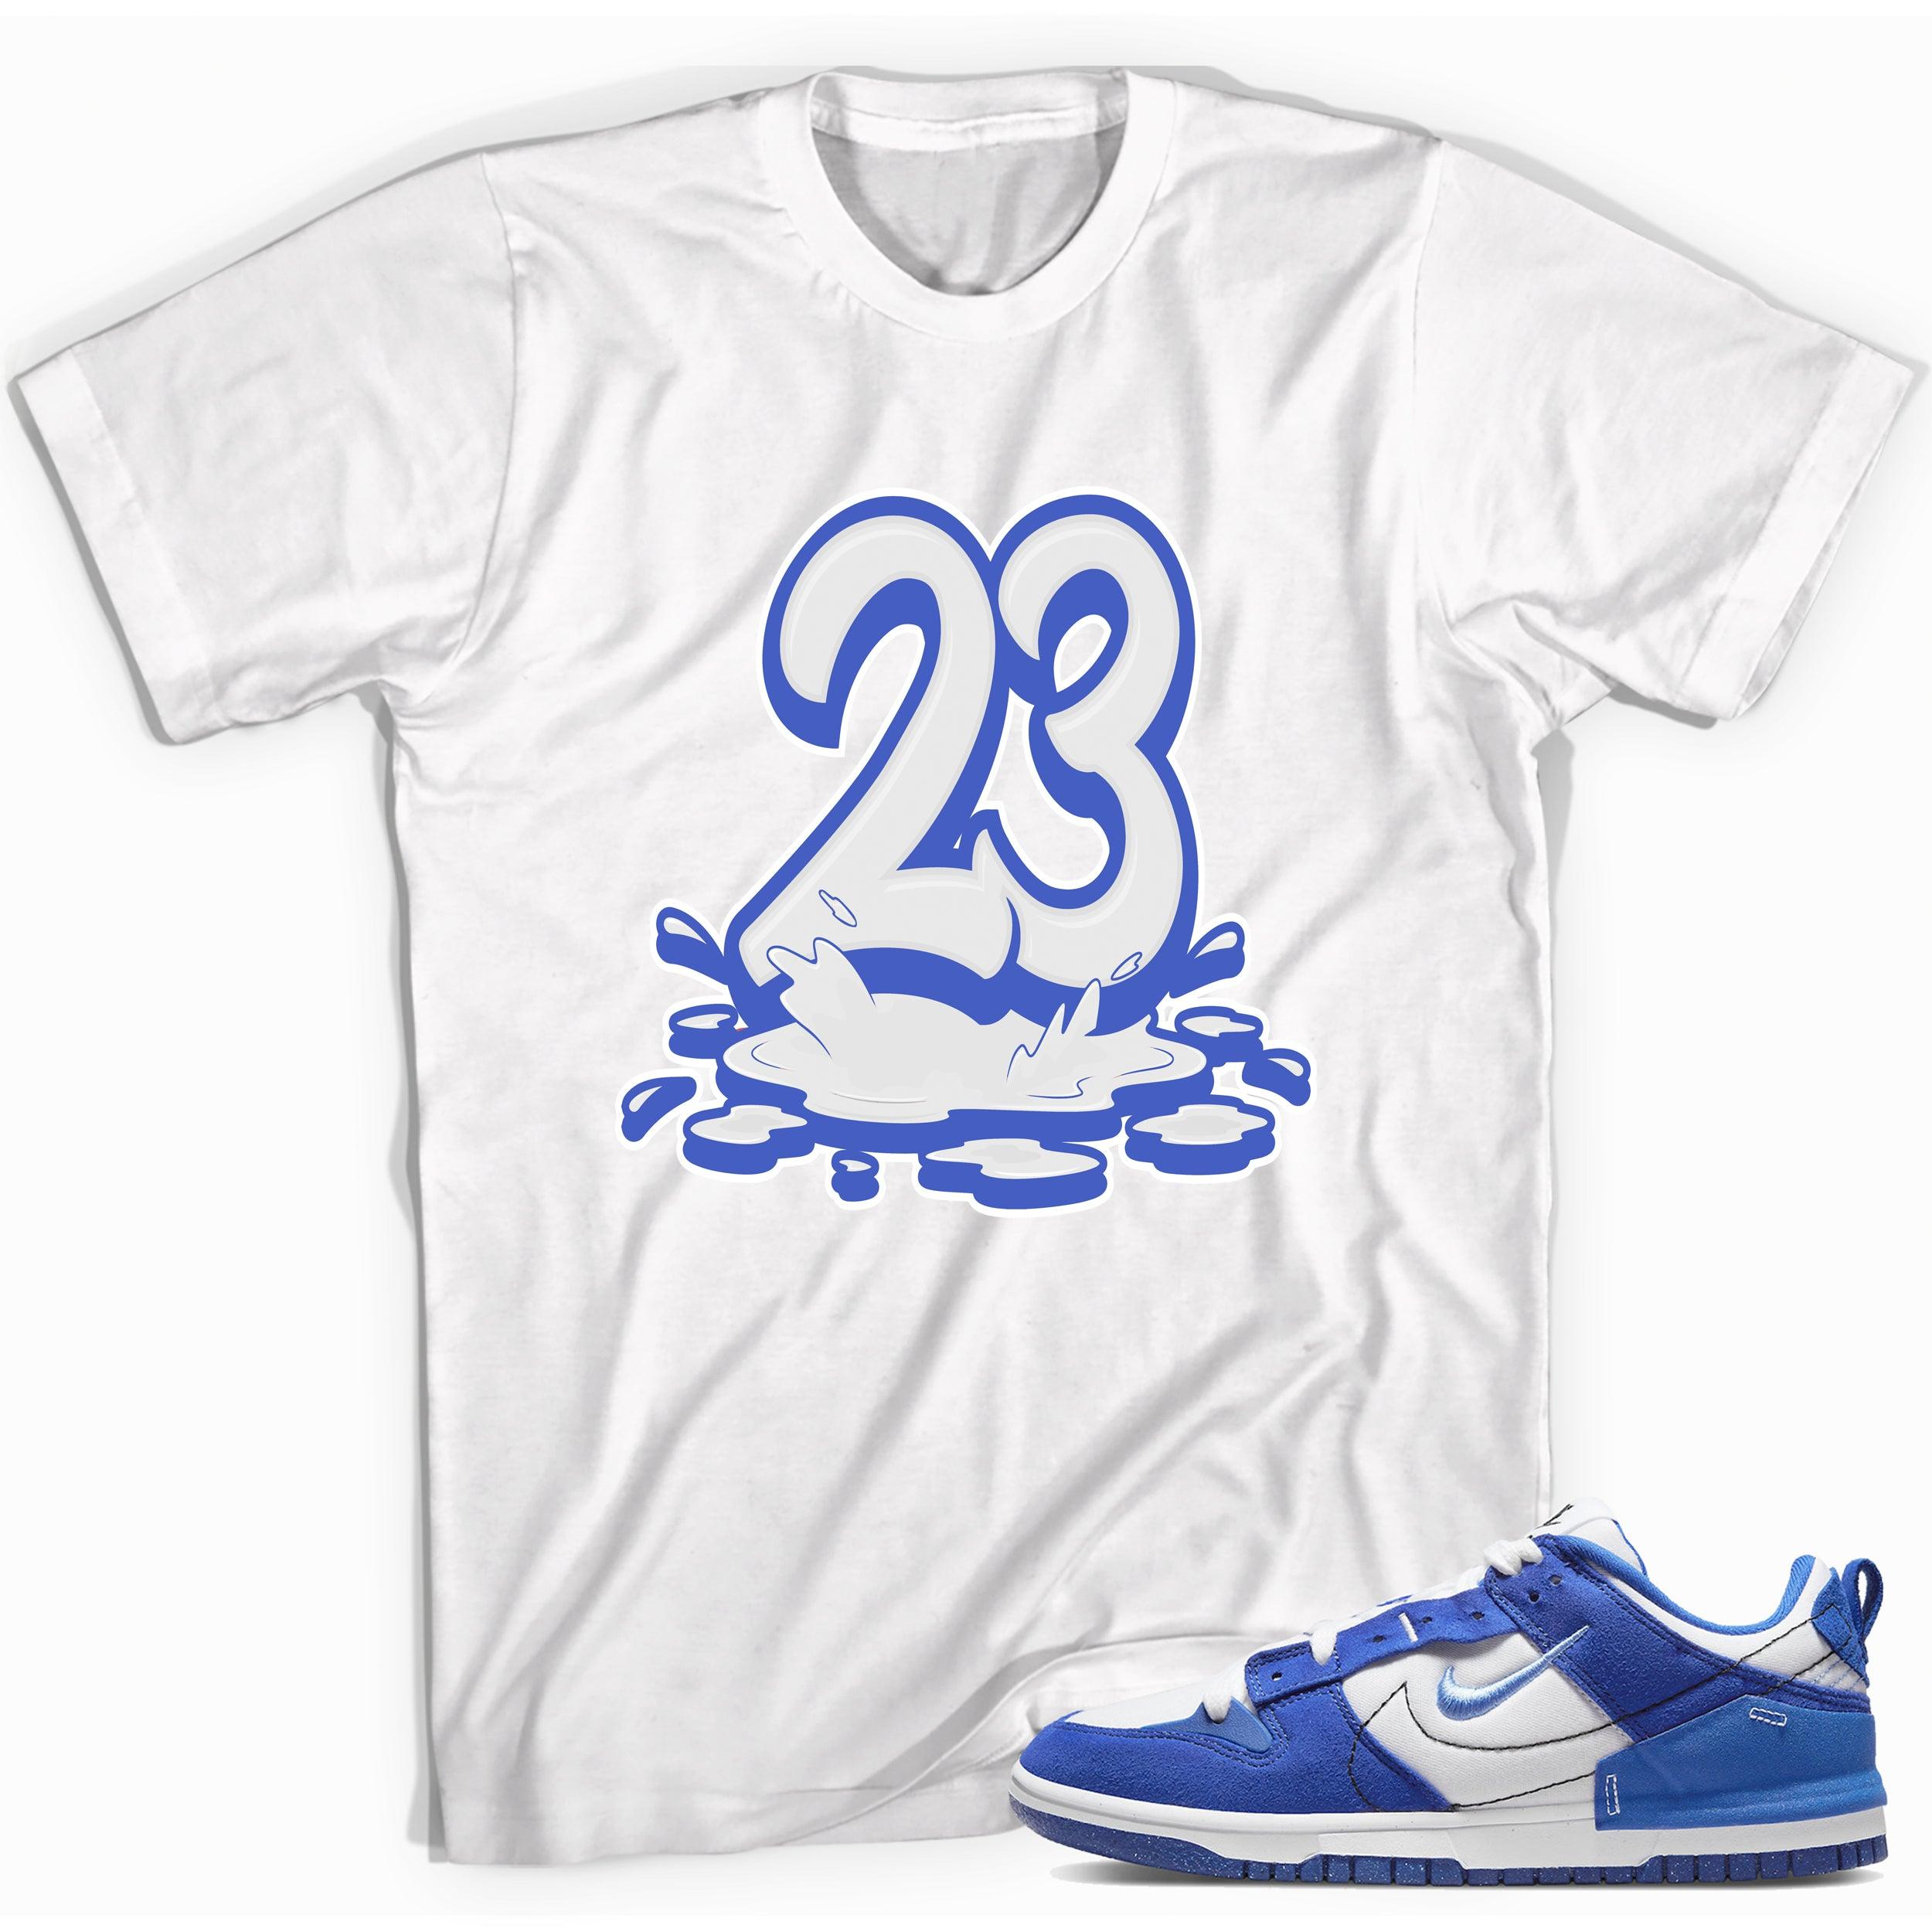 Number 23 Melting Shirt Nike Dunk Low Disrupt 2 Hyper Royal photo